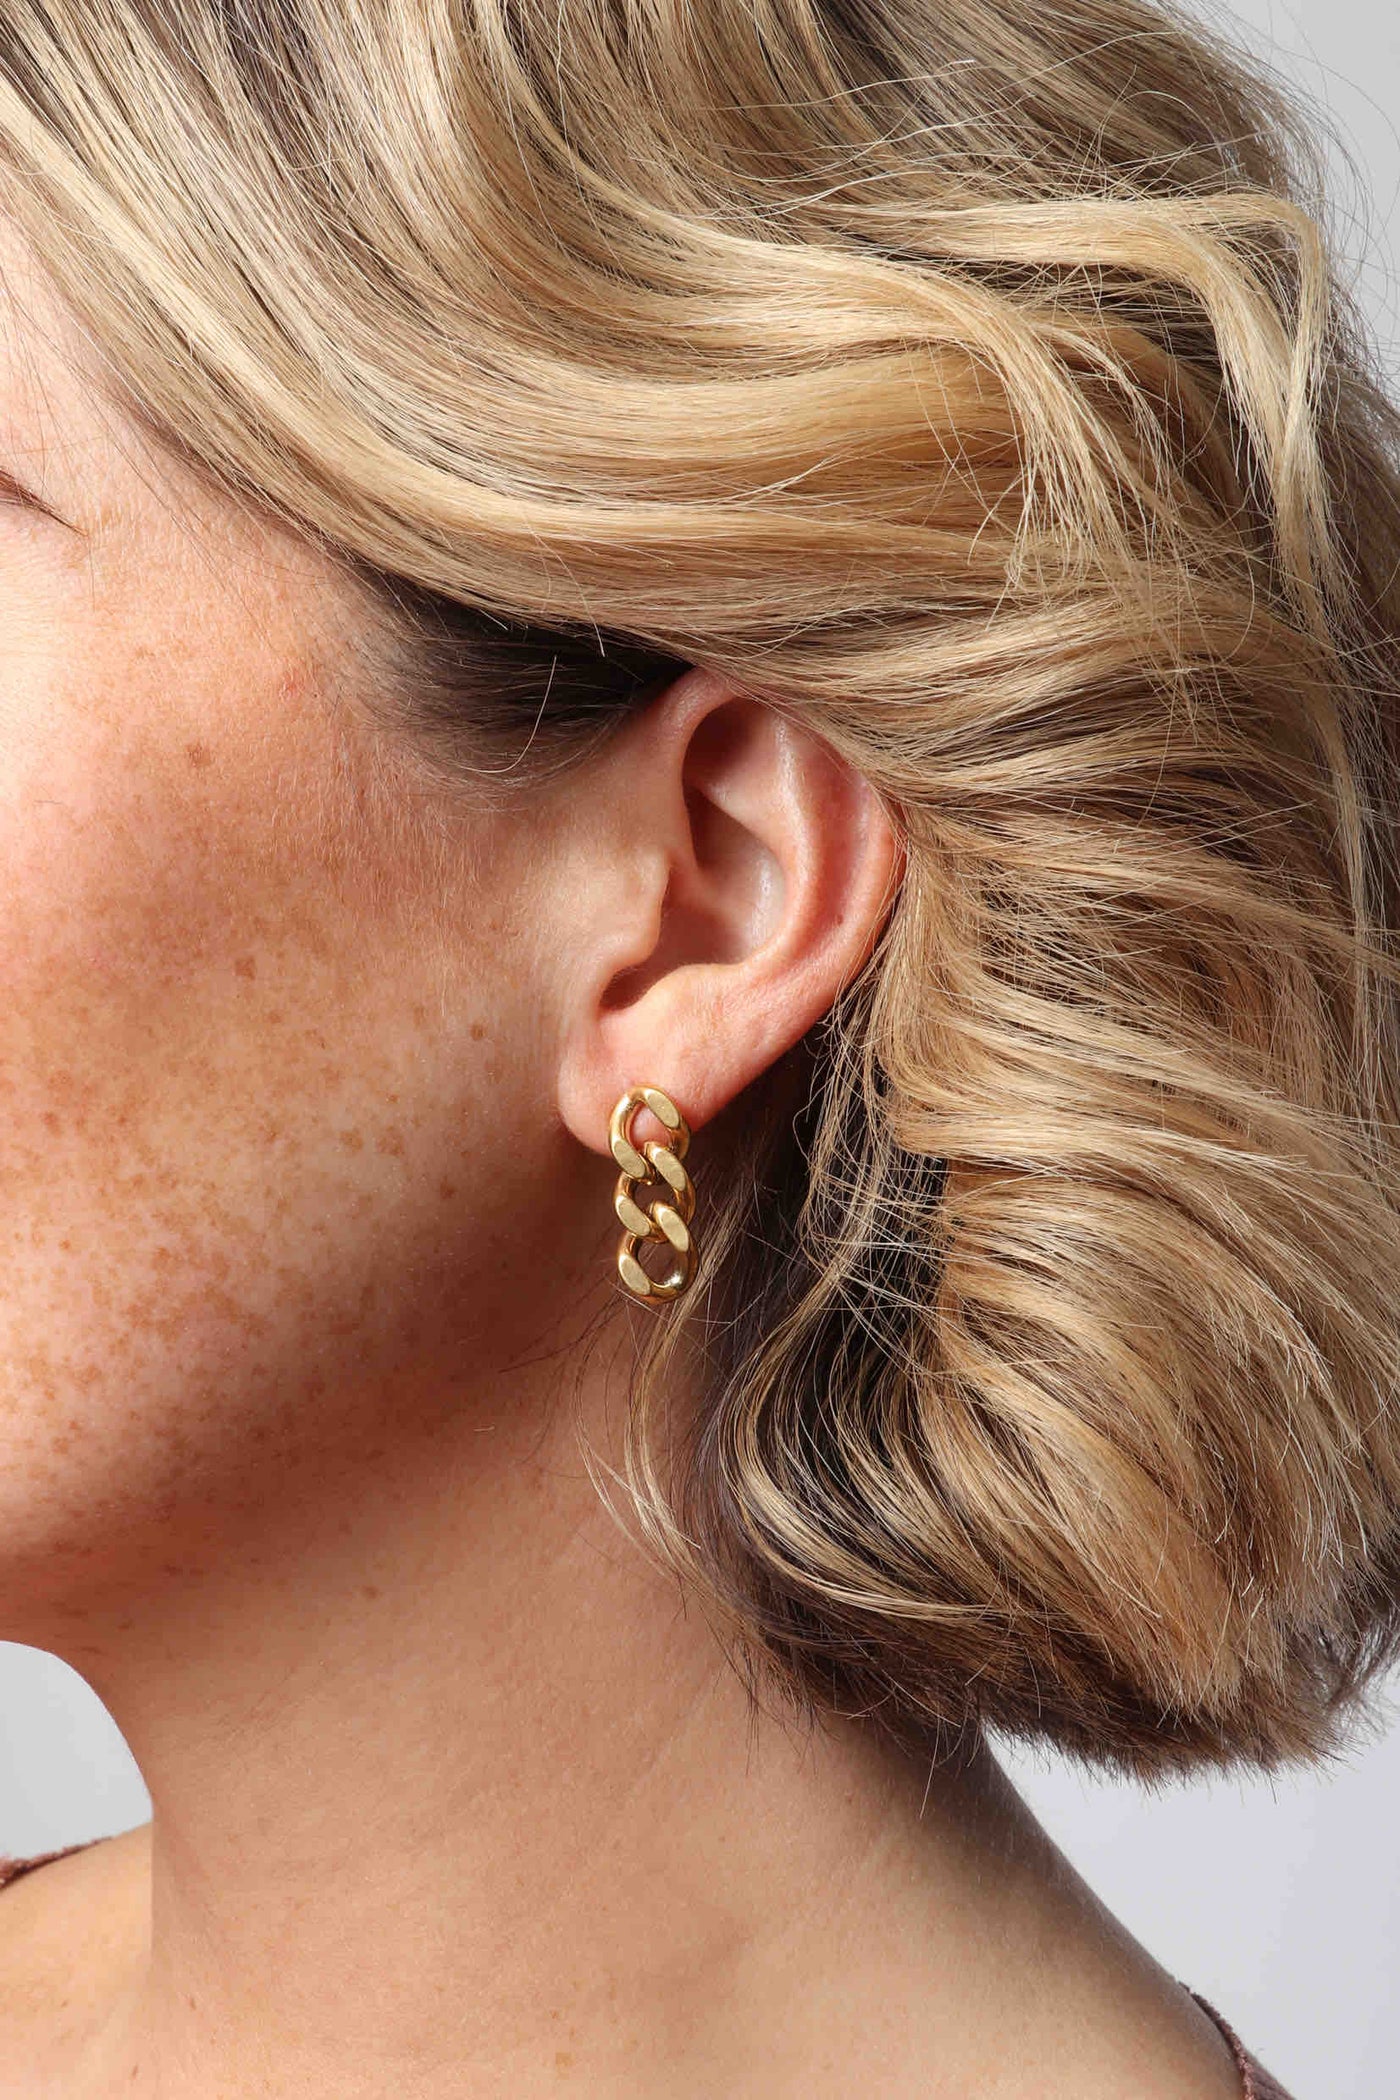 Marrin Costello wearing Marrin Costello Jewelry Queens Drops cuban link post back earrings — for pierced ears. Waterproof, sustainable, hypoallergenic. 14k gold plated stainless steel.